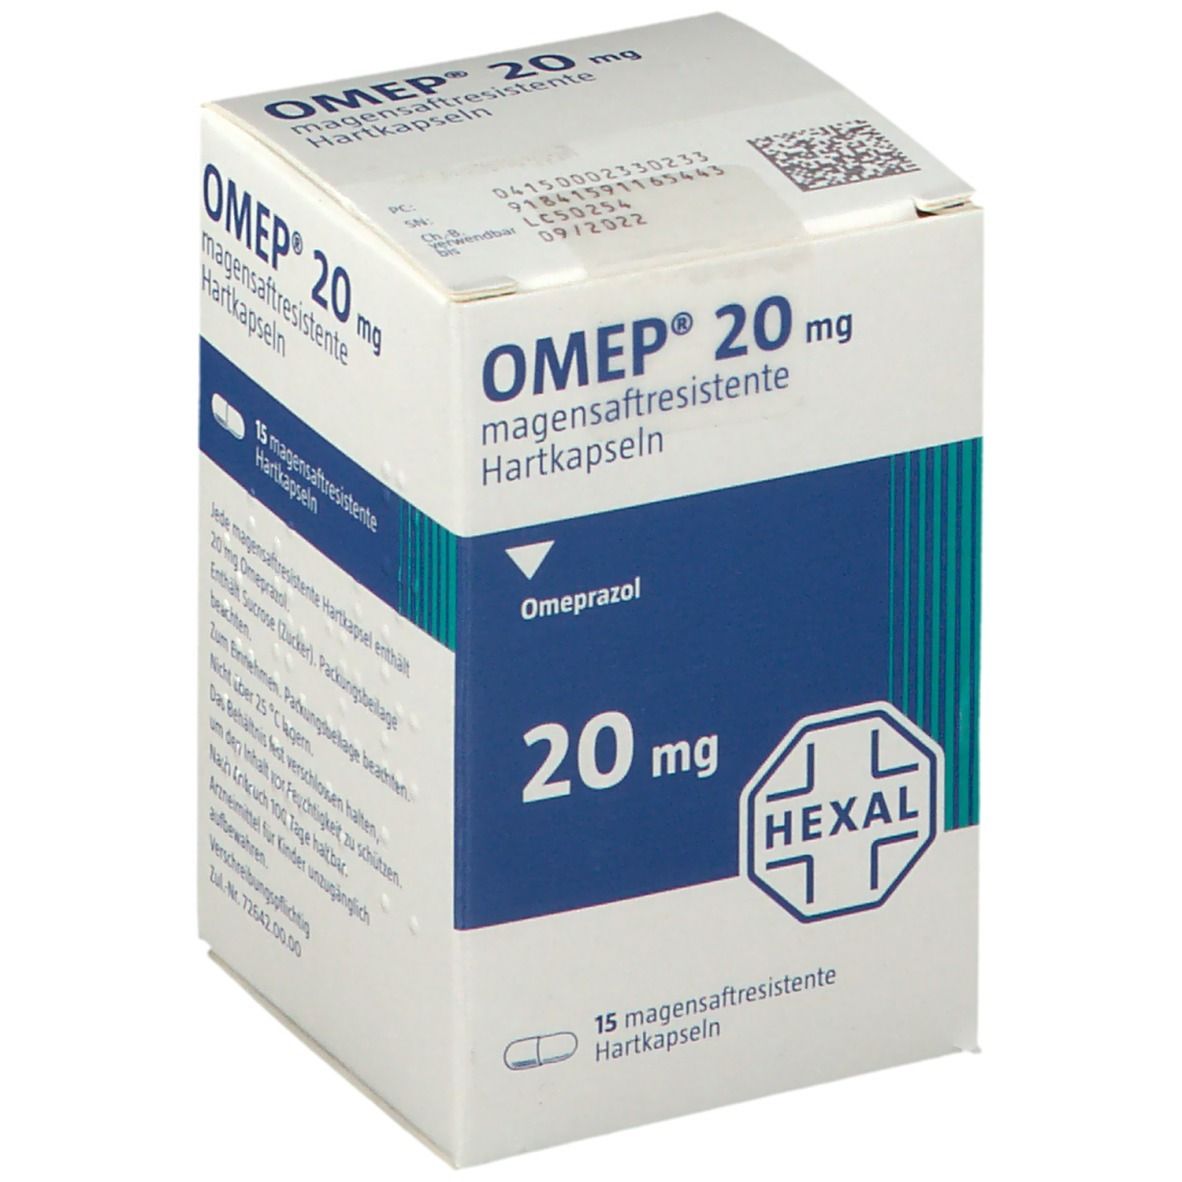 OMEP® 20 mg